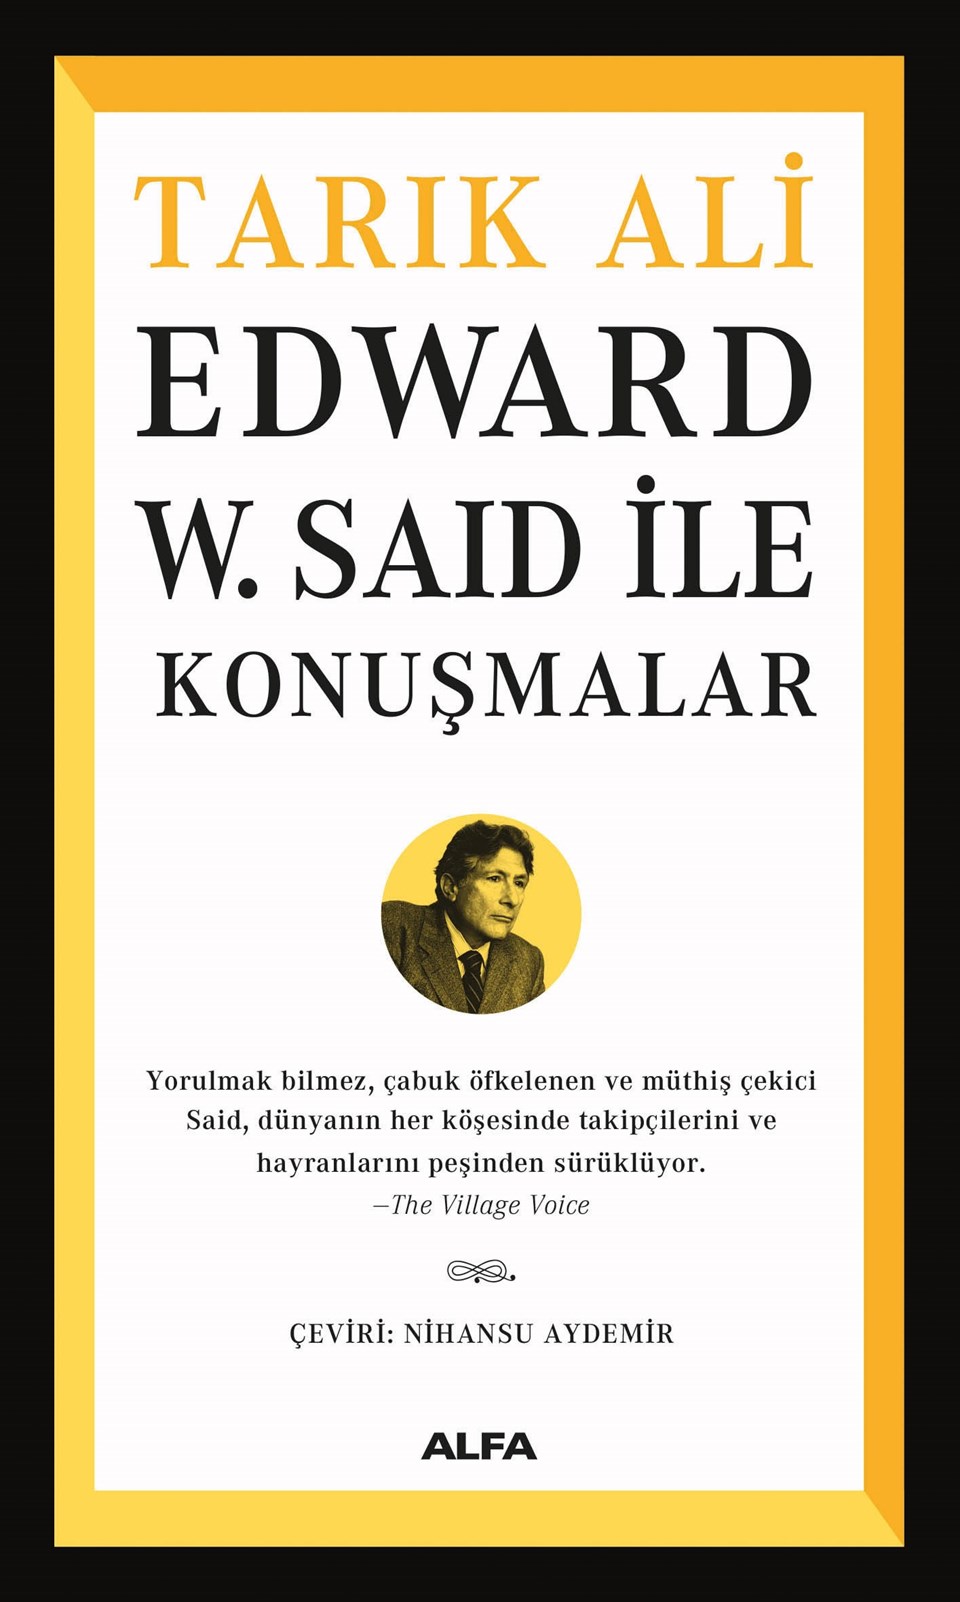 Aktivist ve teorisyen Edward Said'le son röportaj kitap oldu - 1